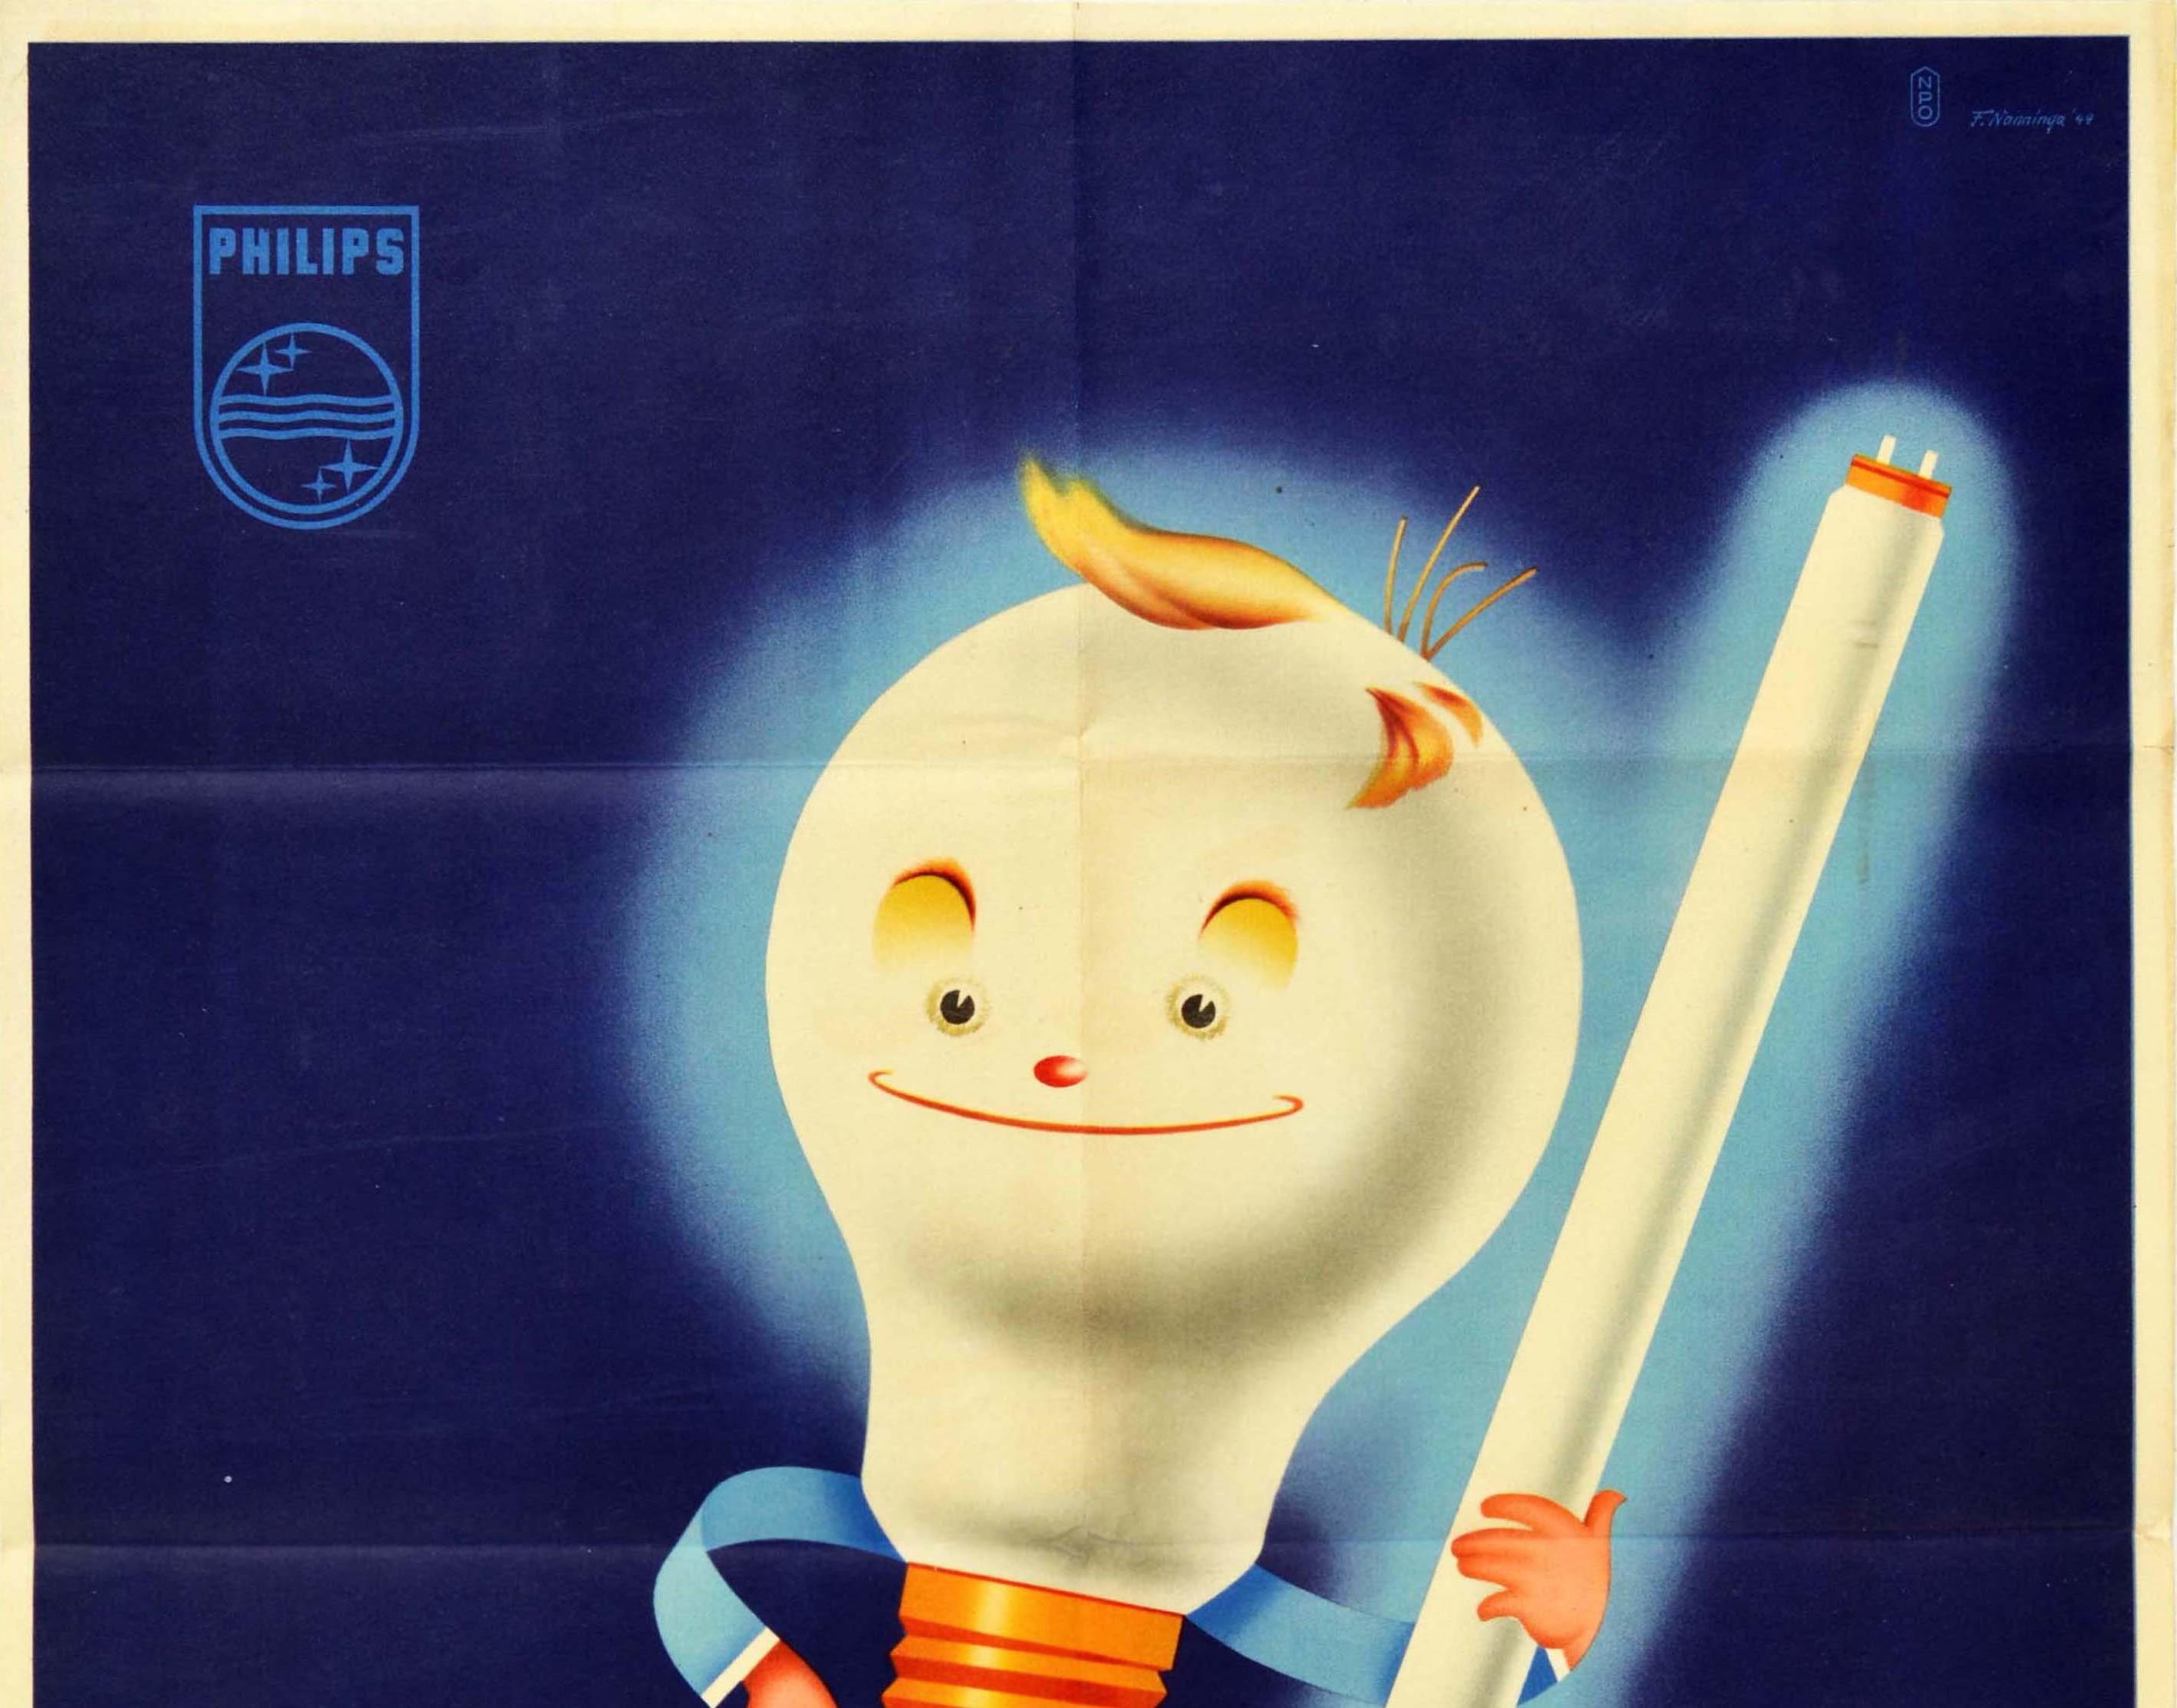 Original Vintage Advertising Poster Philips Lighting Smiling Light Bulb Design - Print by Frank Nanninga